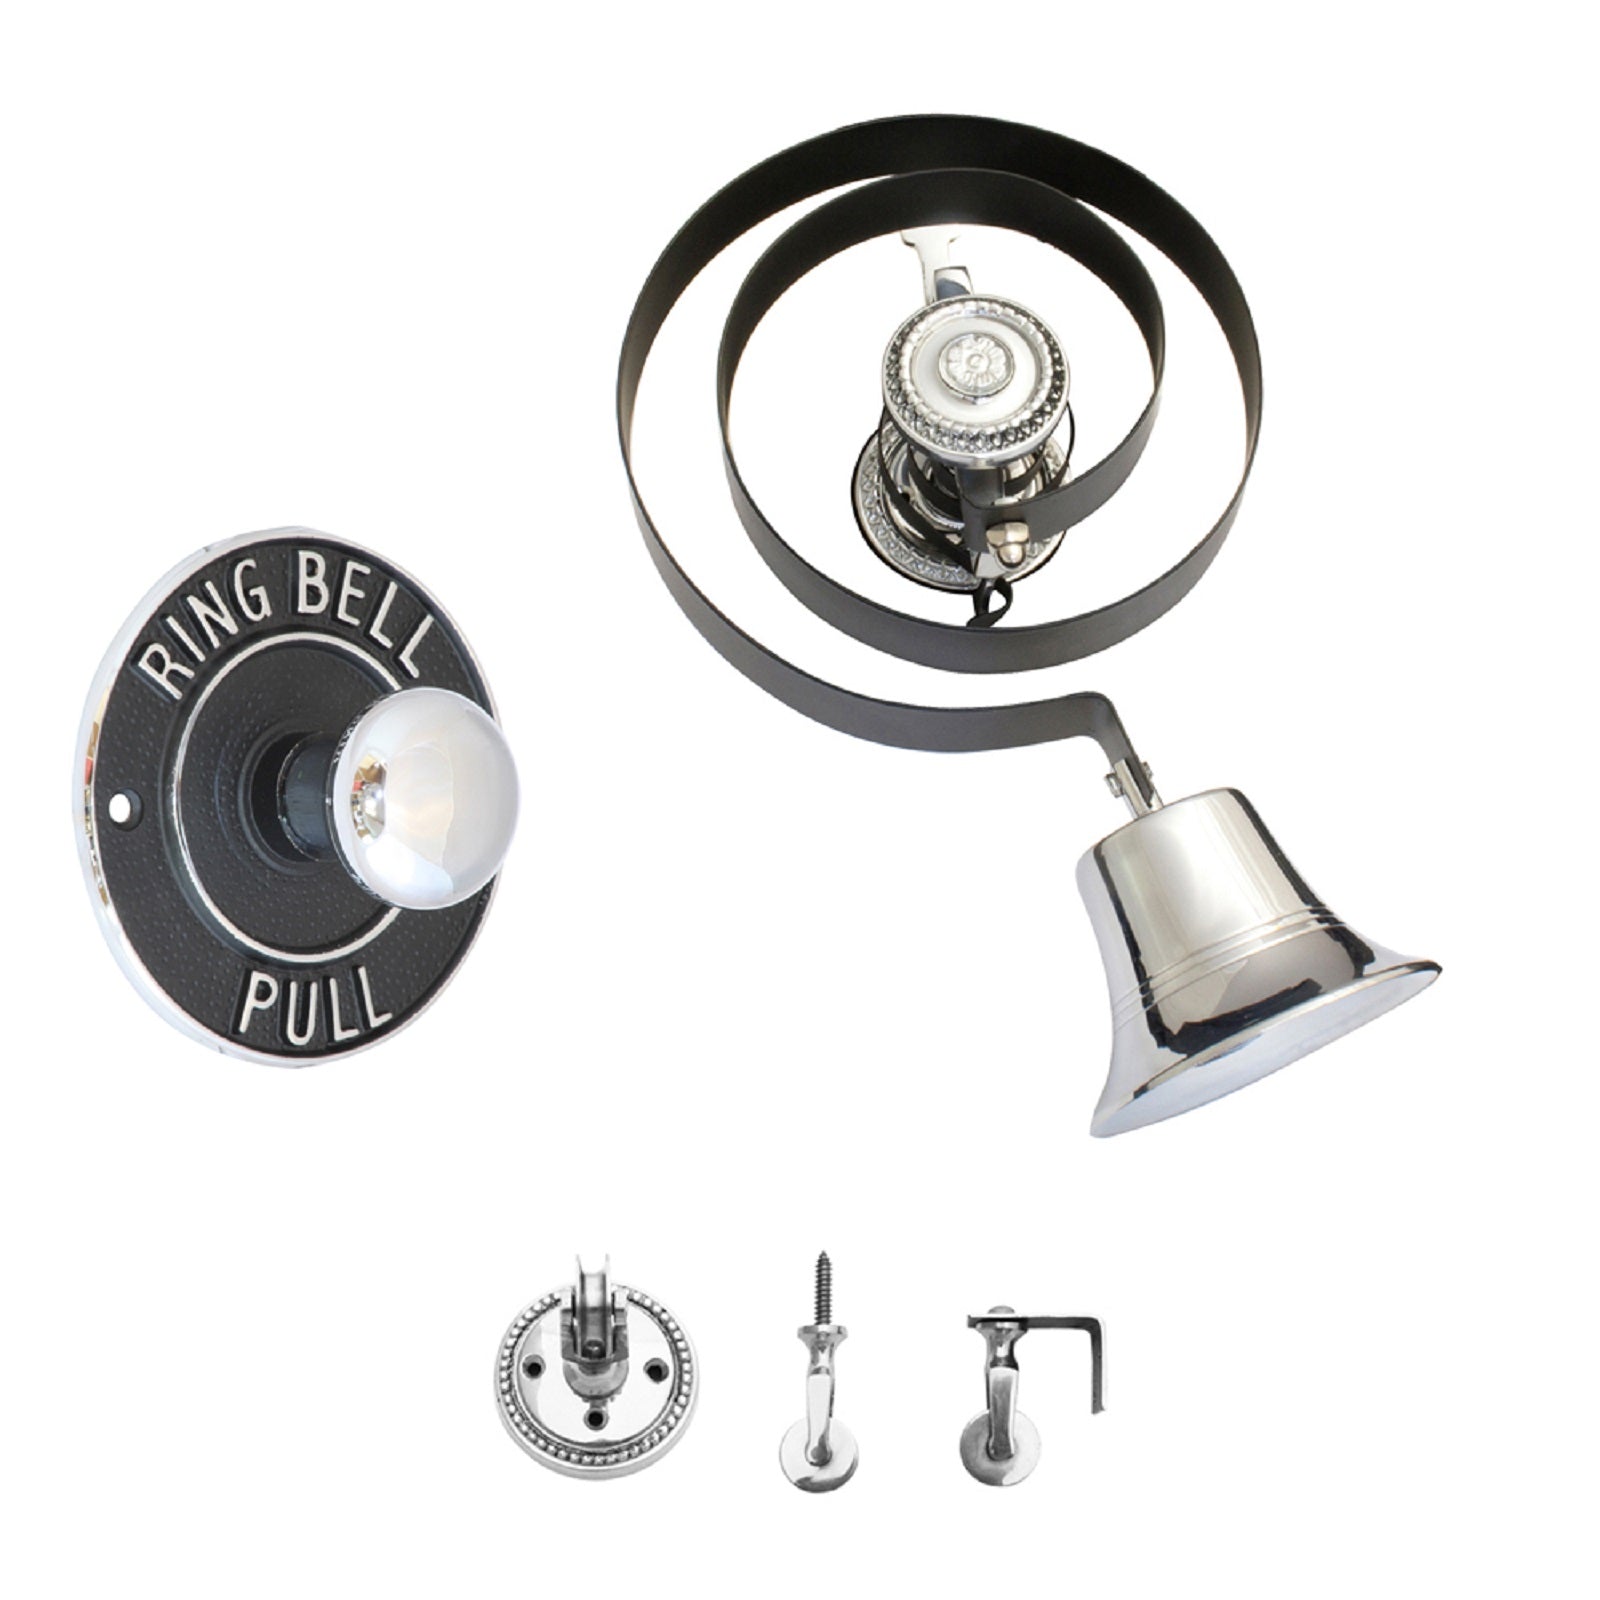 Butler's Bell c/w Pulleys & Circular Bell Pull